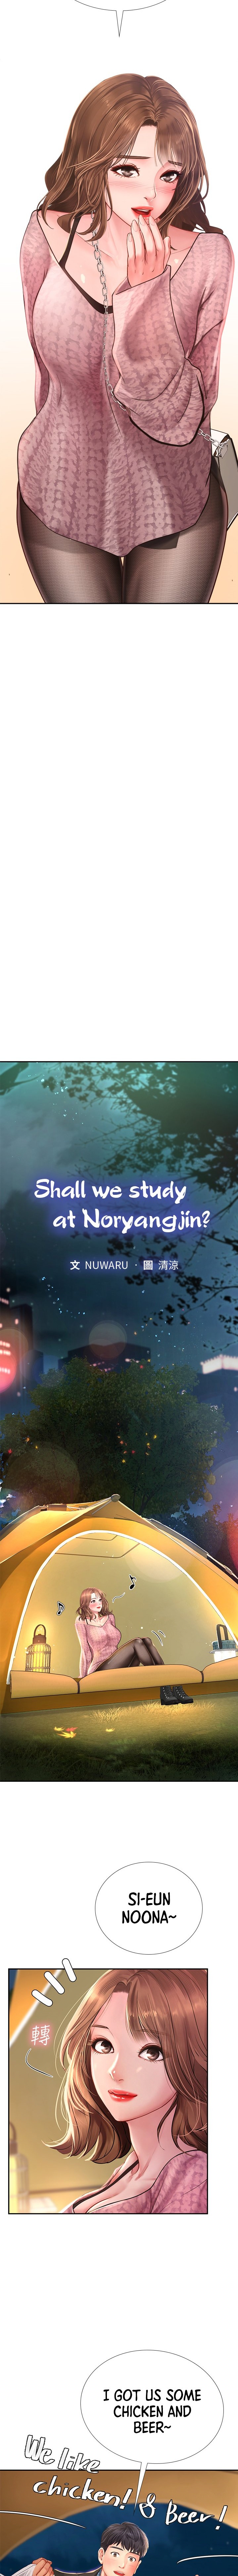 Should I Study at Noryangjin? - Chapter 81 Page 2